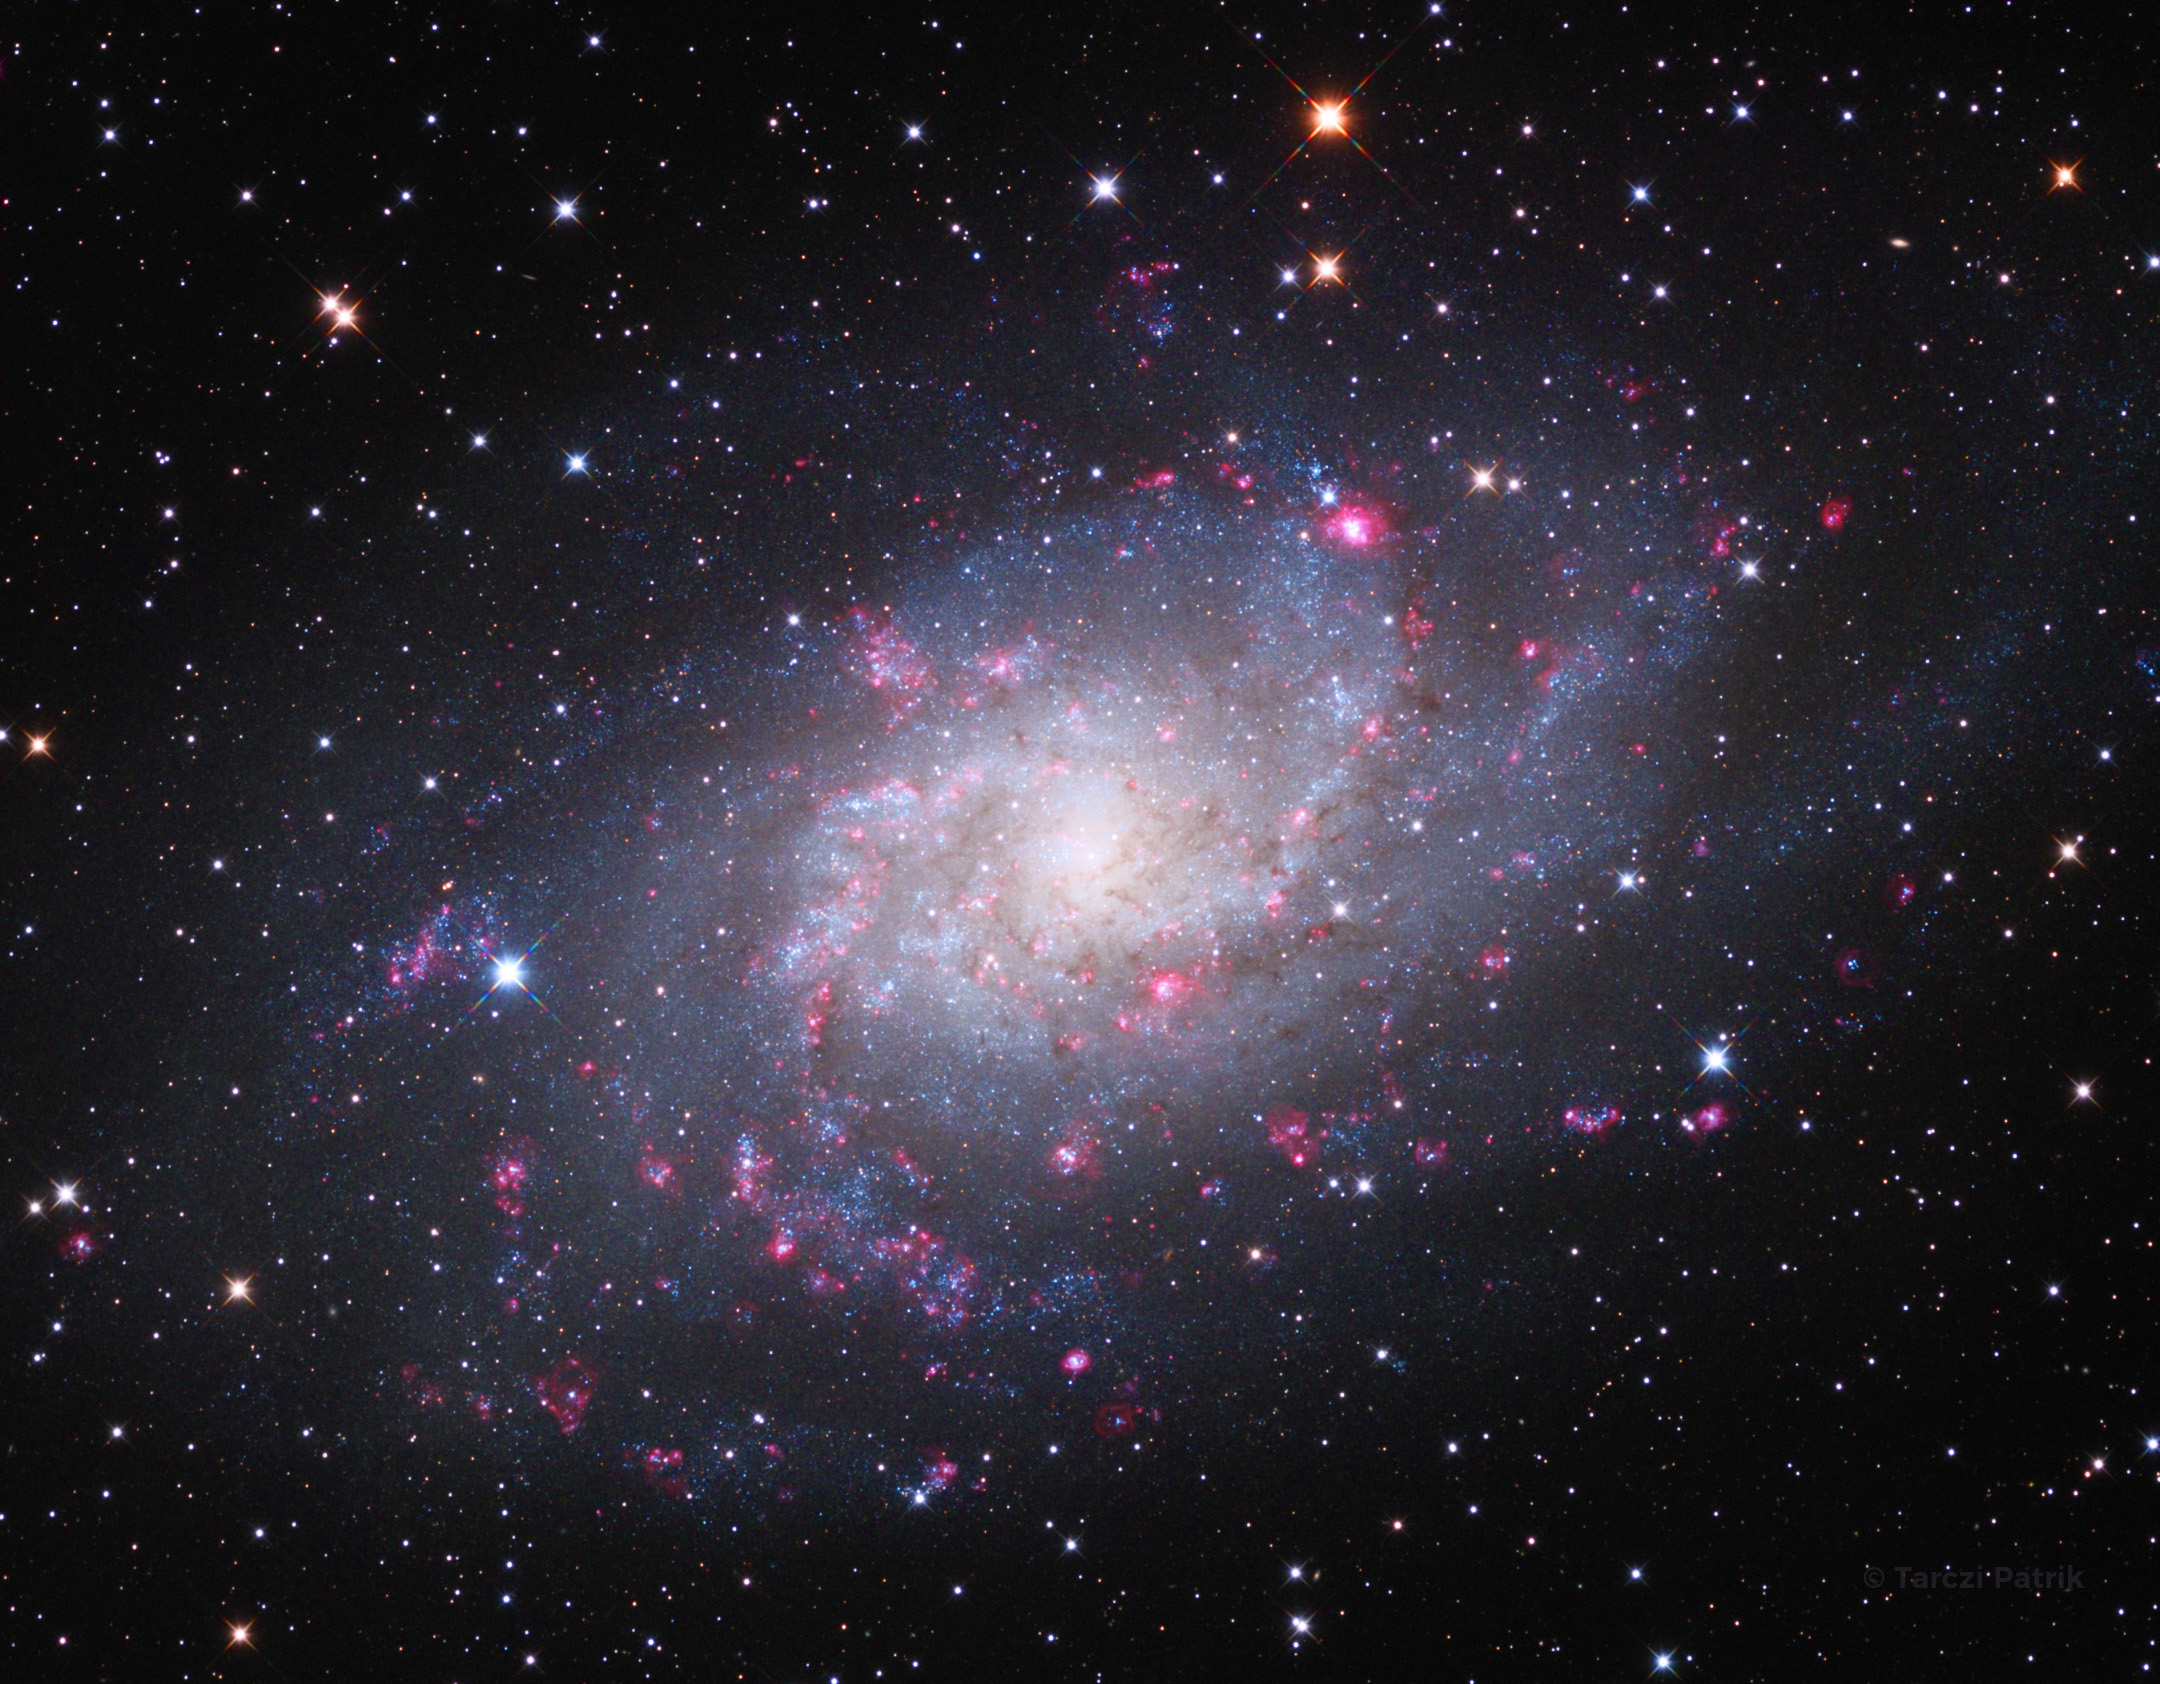 The Triangulum Galaxy - M 33